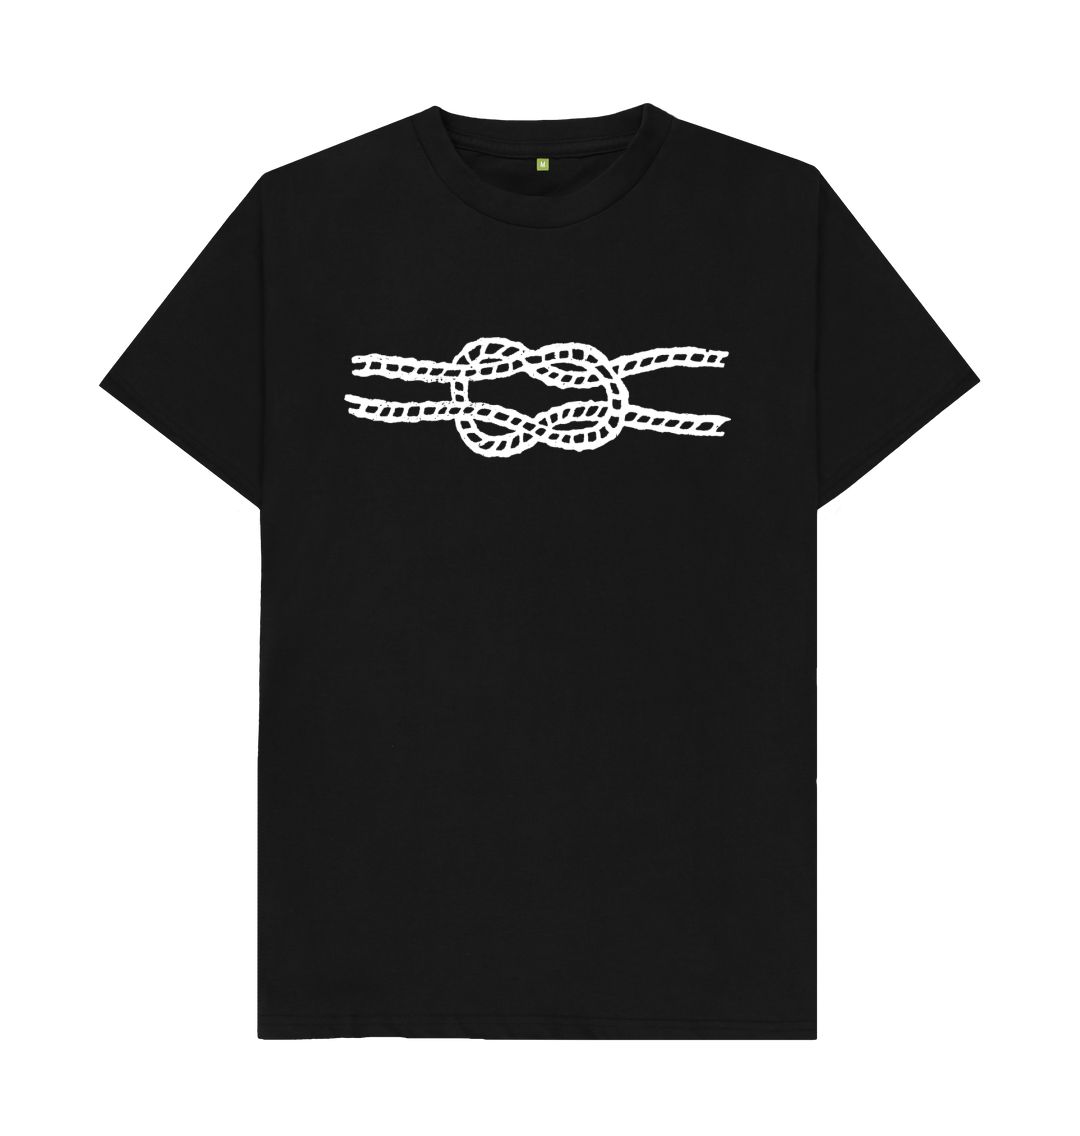 Black P1AN Knot Mens T-shirt